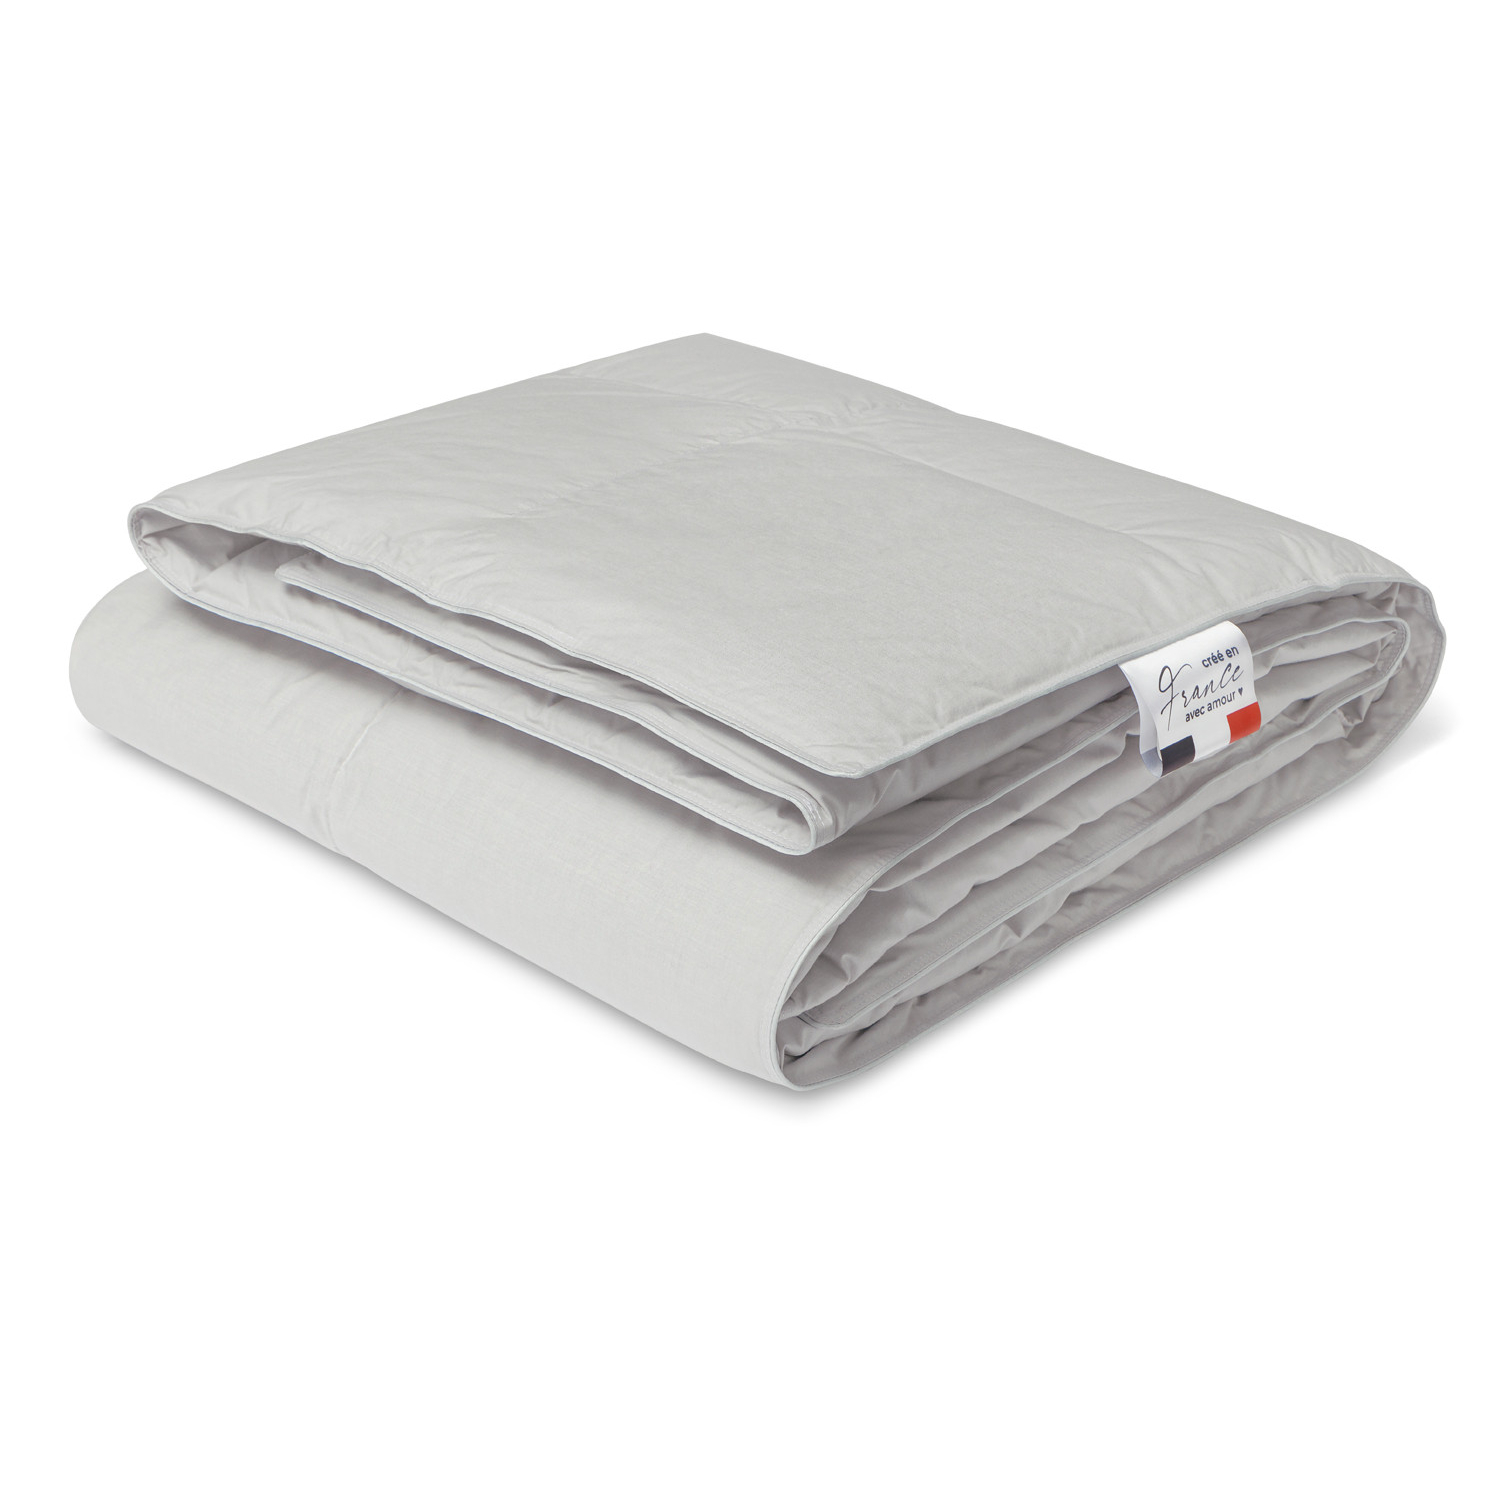 Пуховое одеяло Marc Anri Bretagne серое 140х205 см (МН2076), цвет серый - фото 1